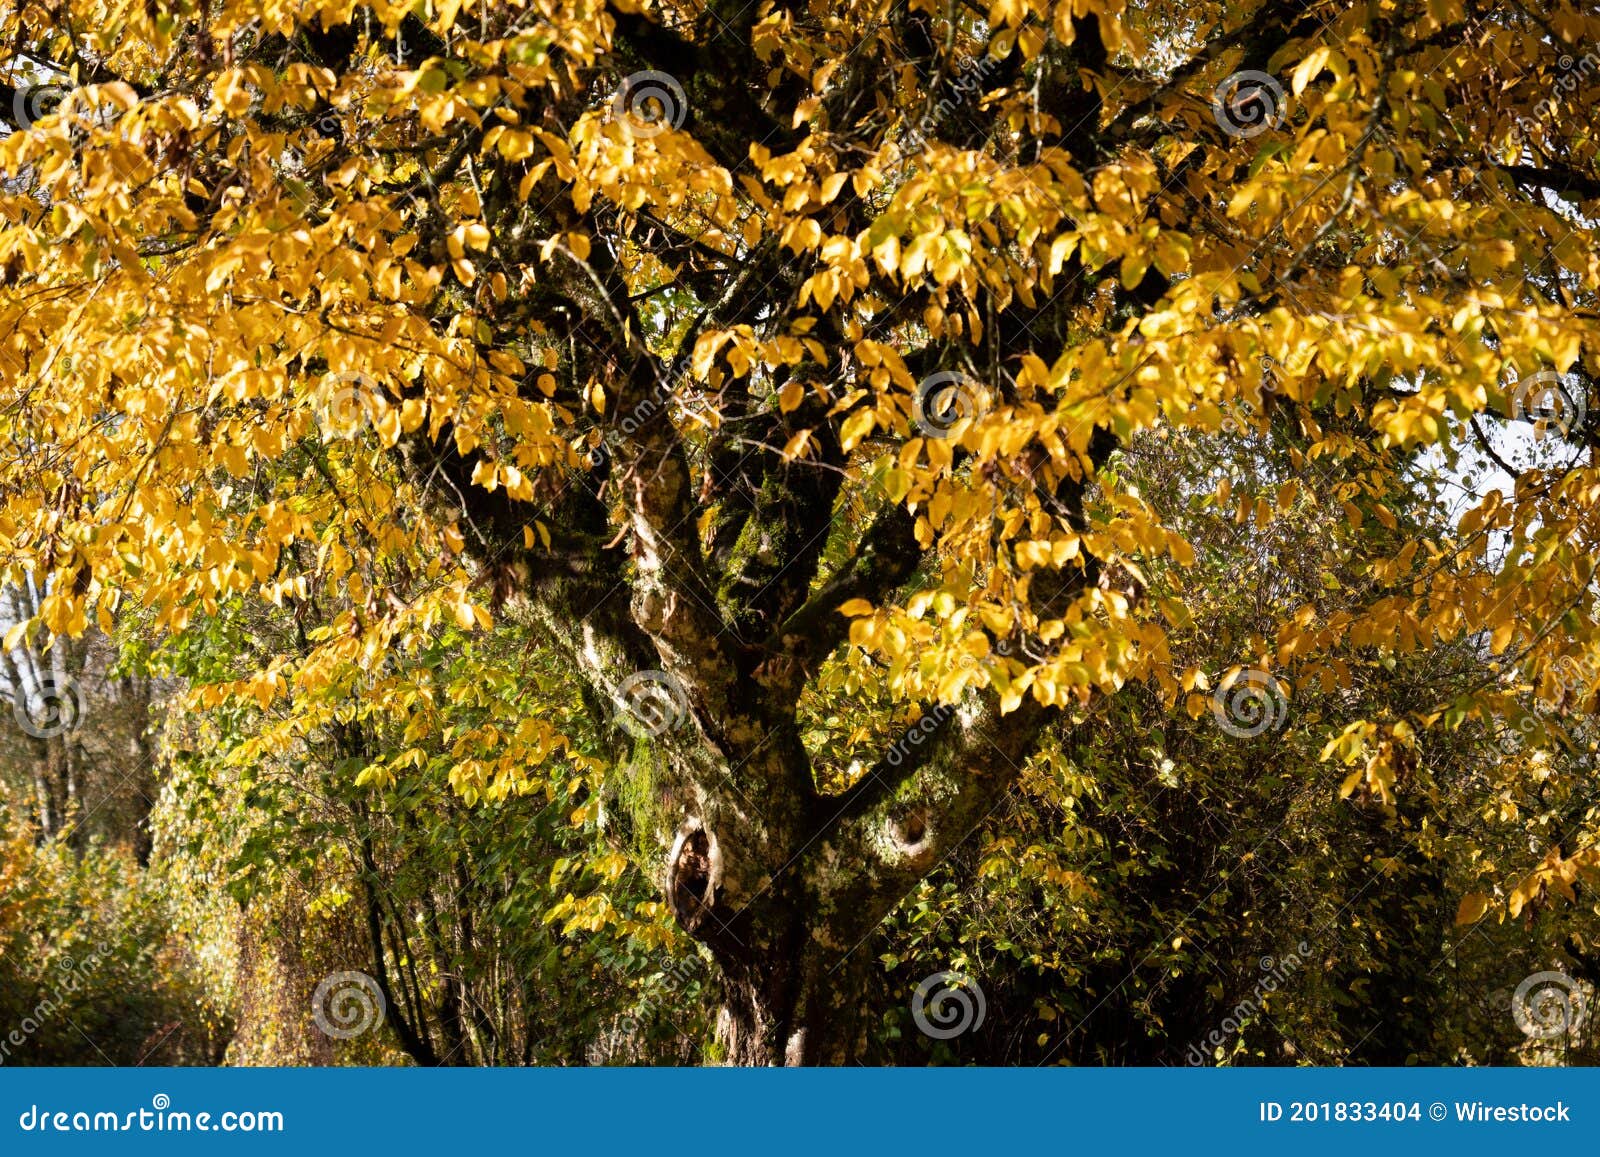 tree with golden leaves - arbre avec feuilles dorees